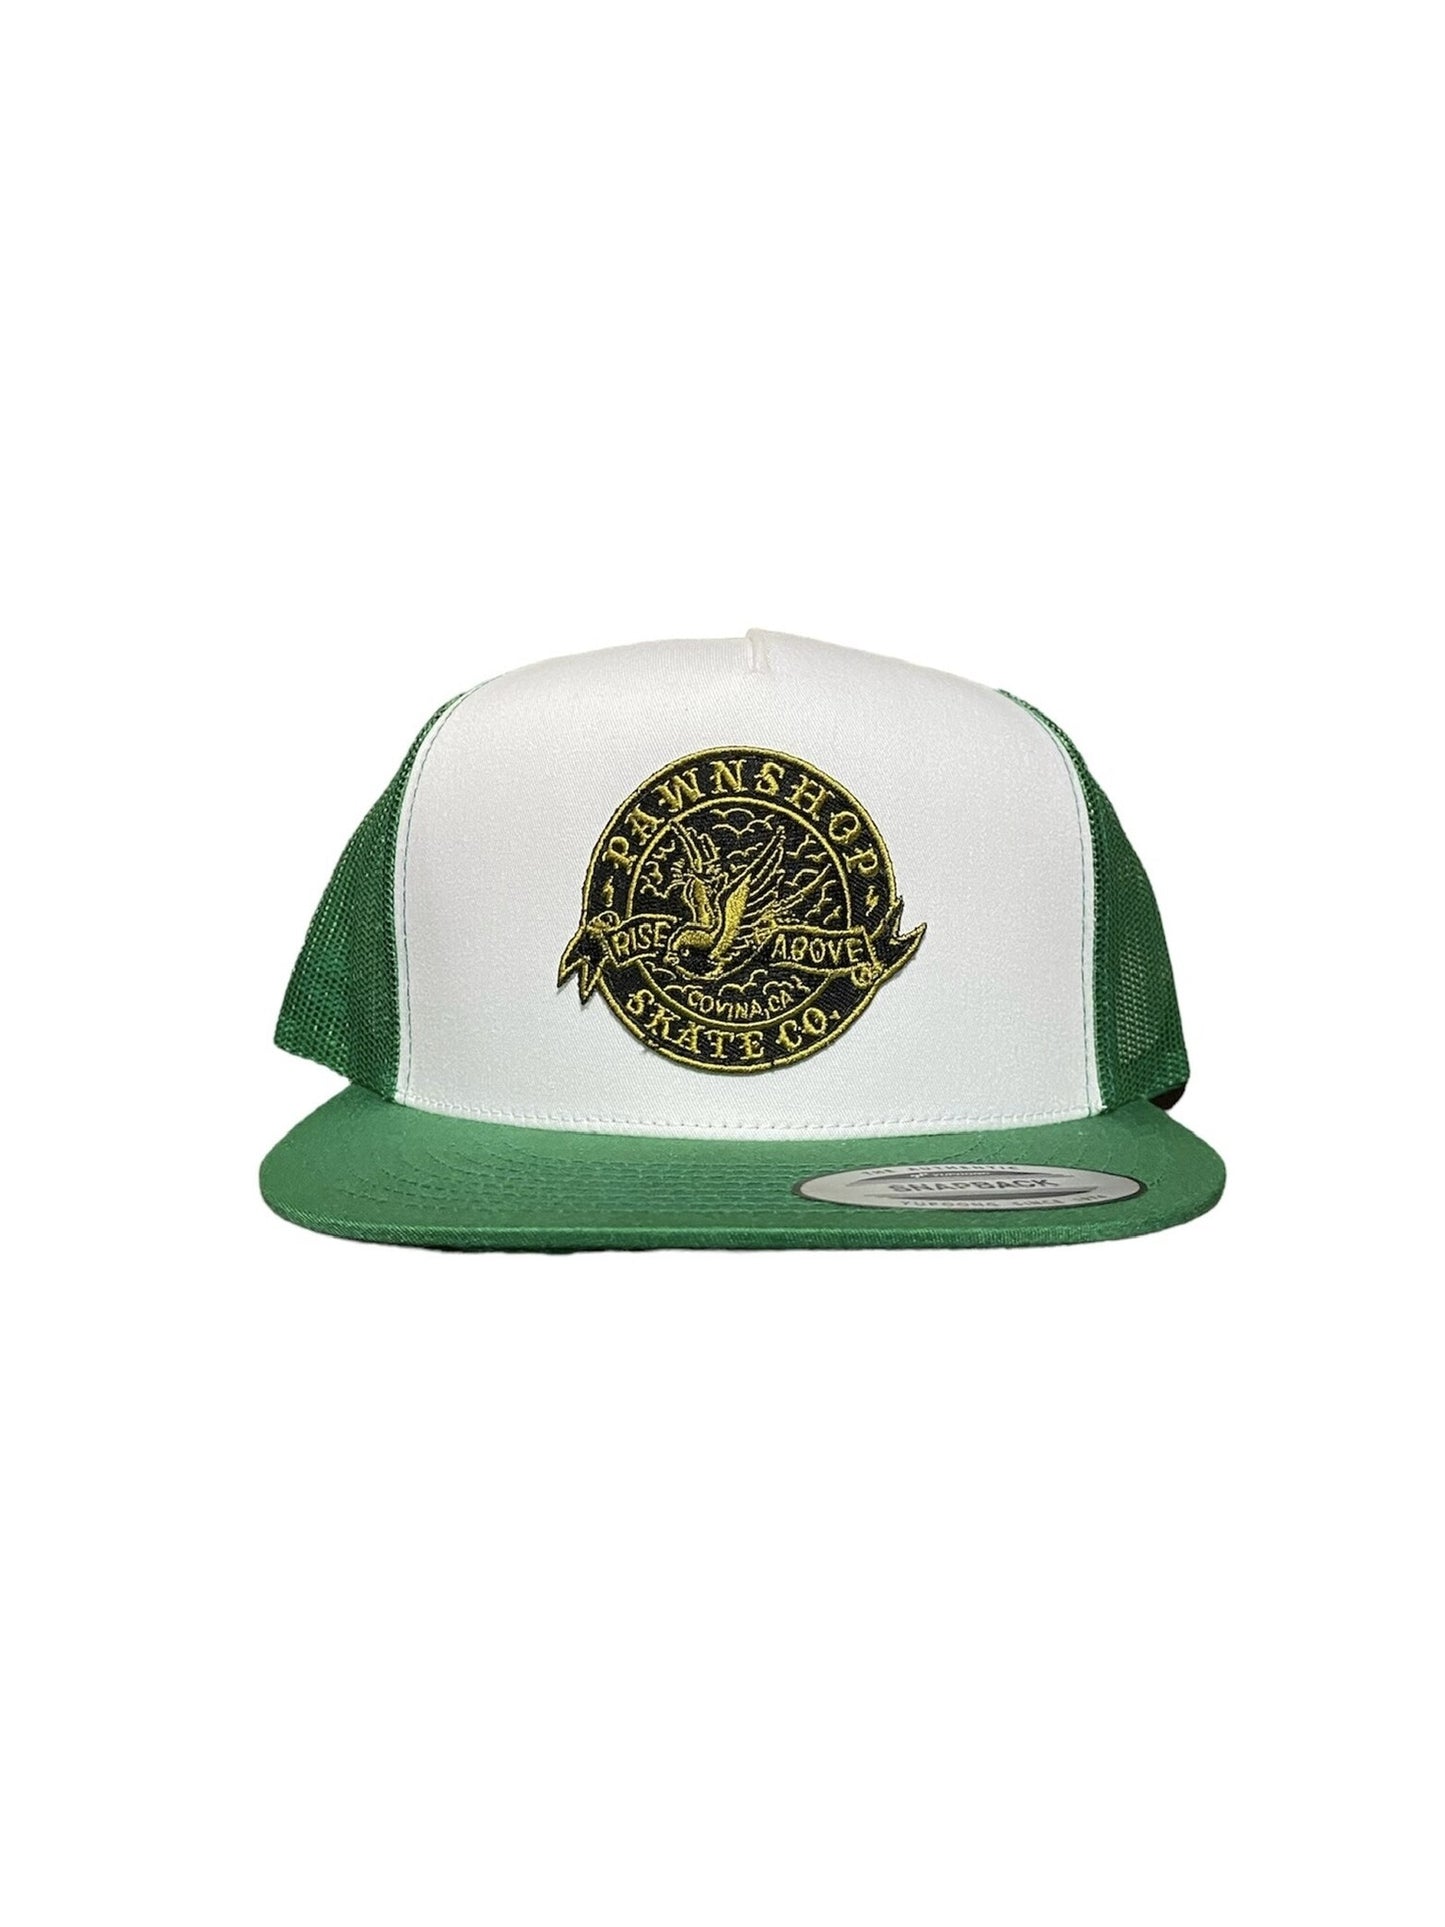 Pawnshop trucker SnapBack hat rise above (green/white)